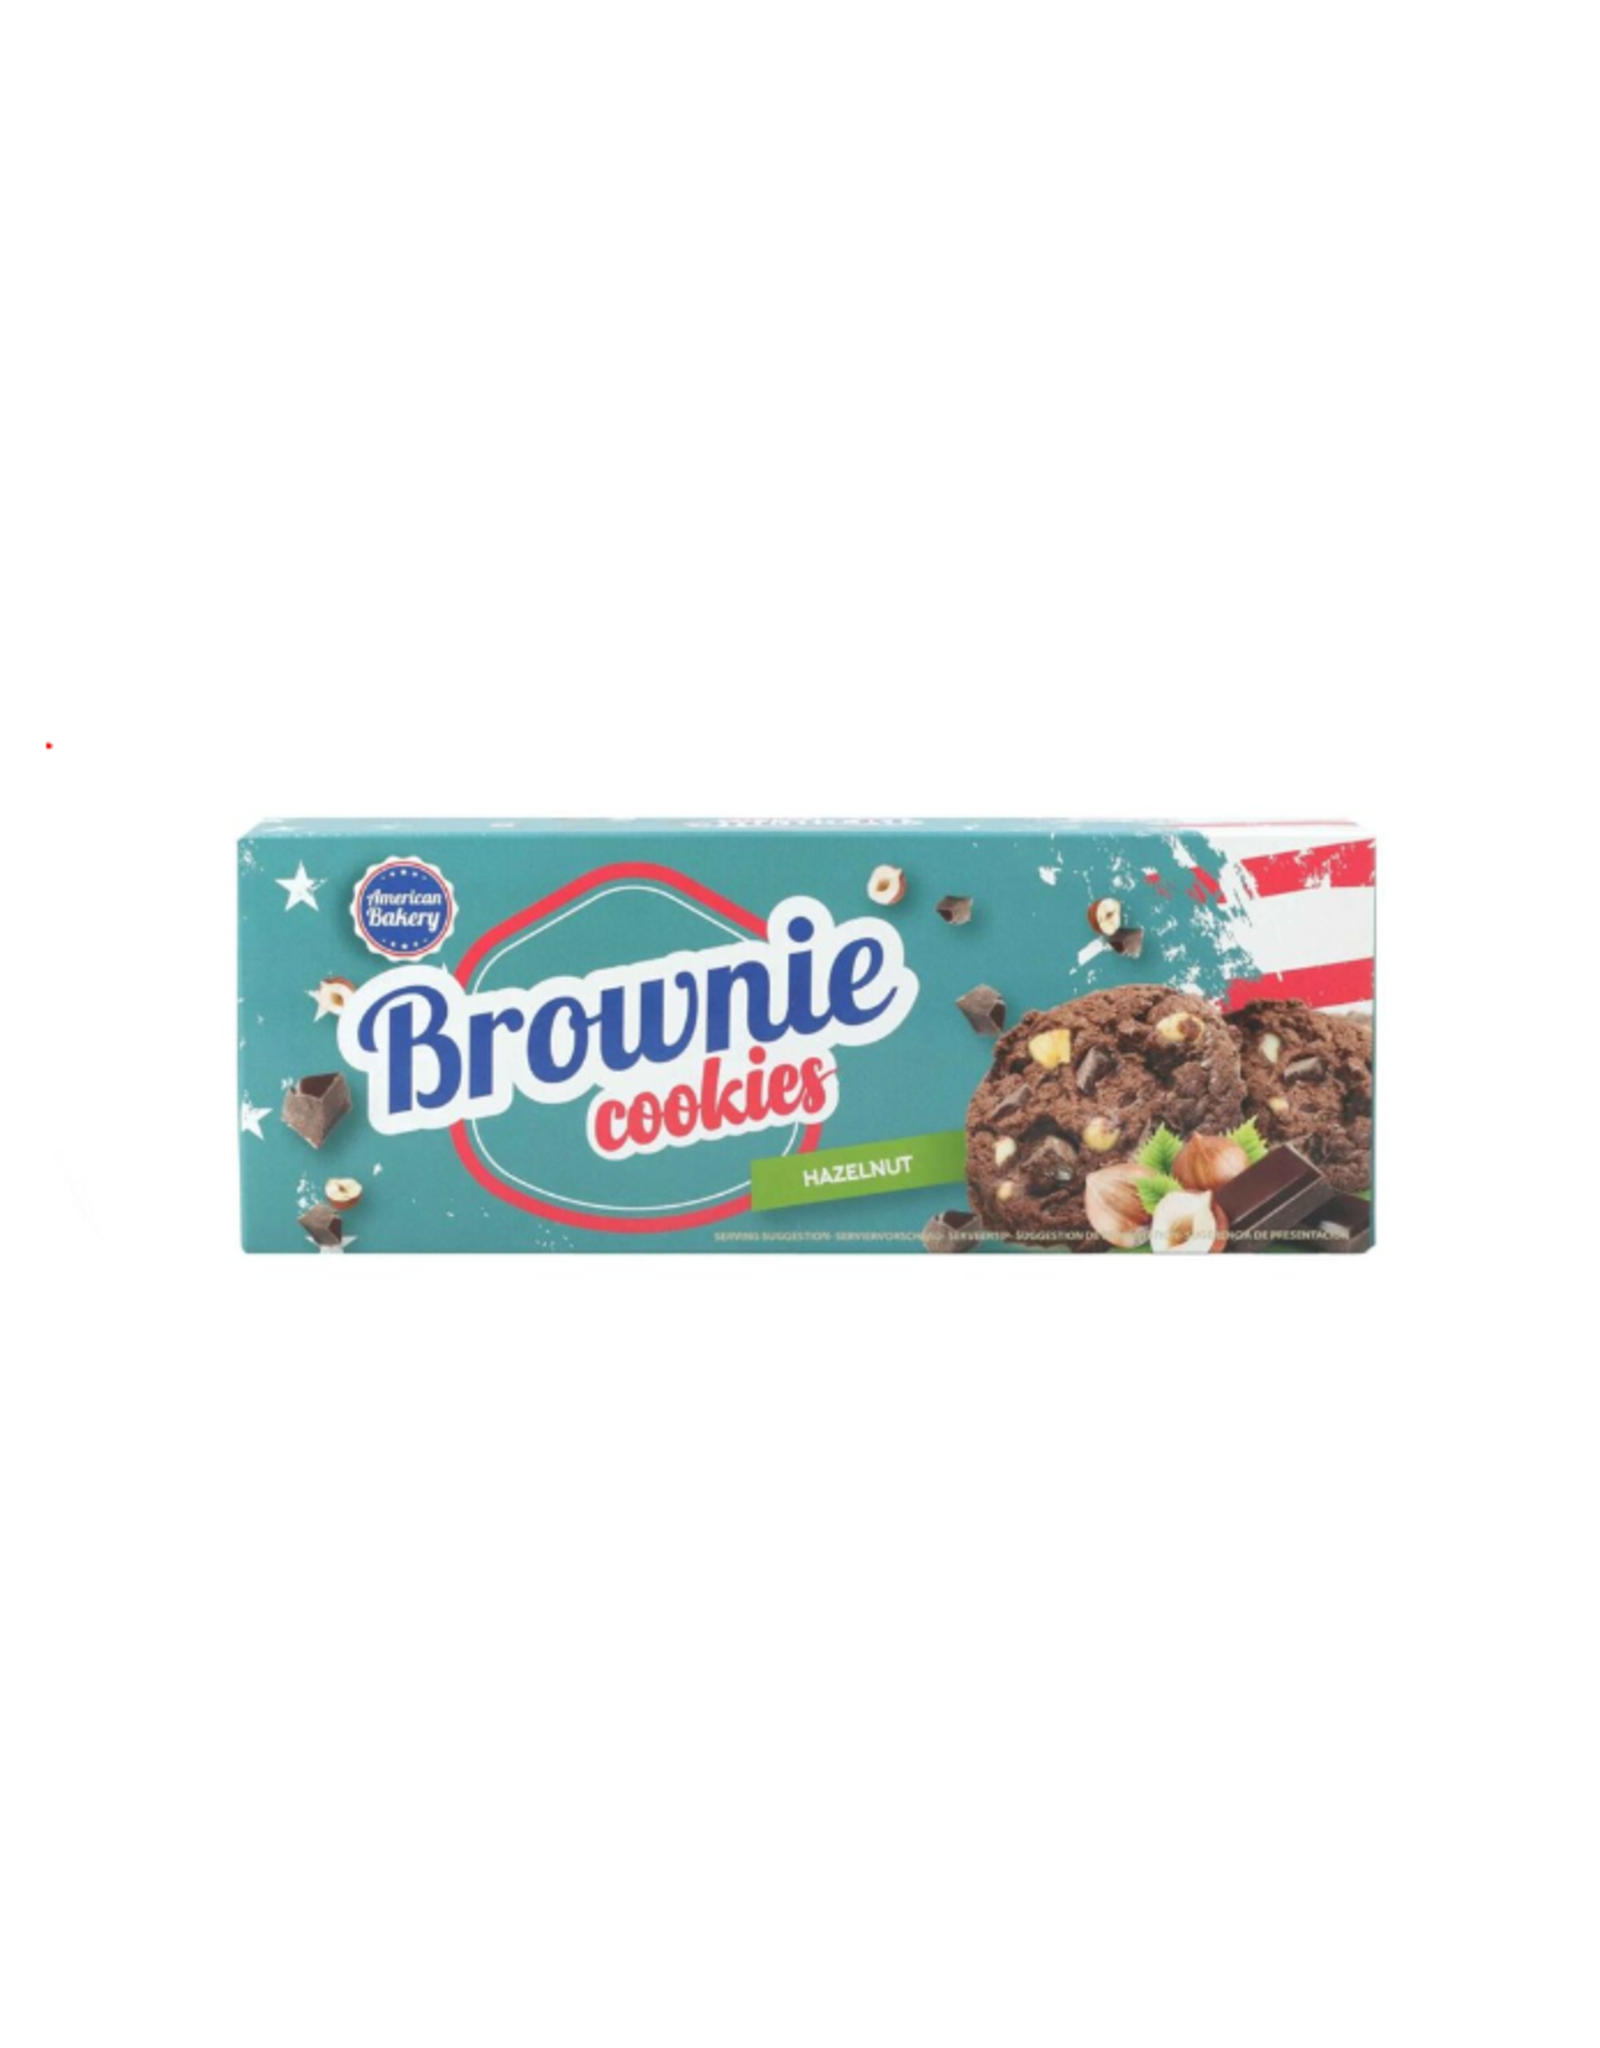 American Bakery - Brownie Cookies With Hazelnut - 106g